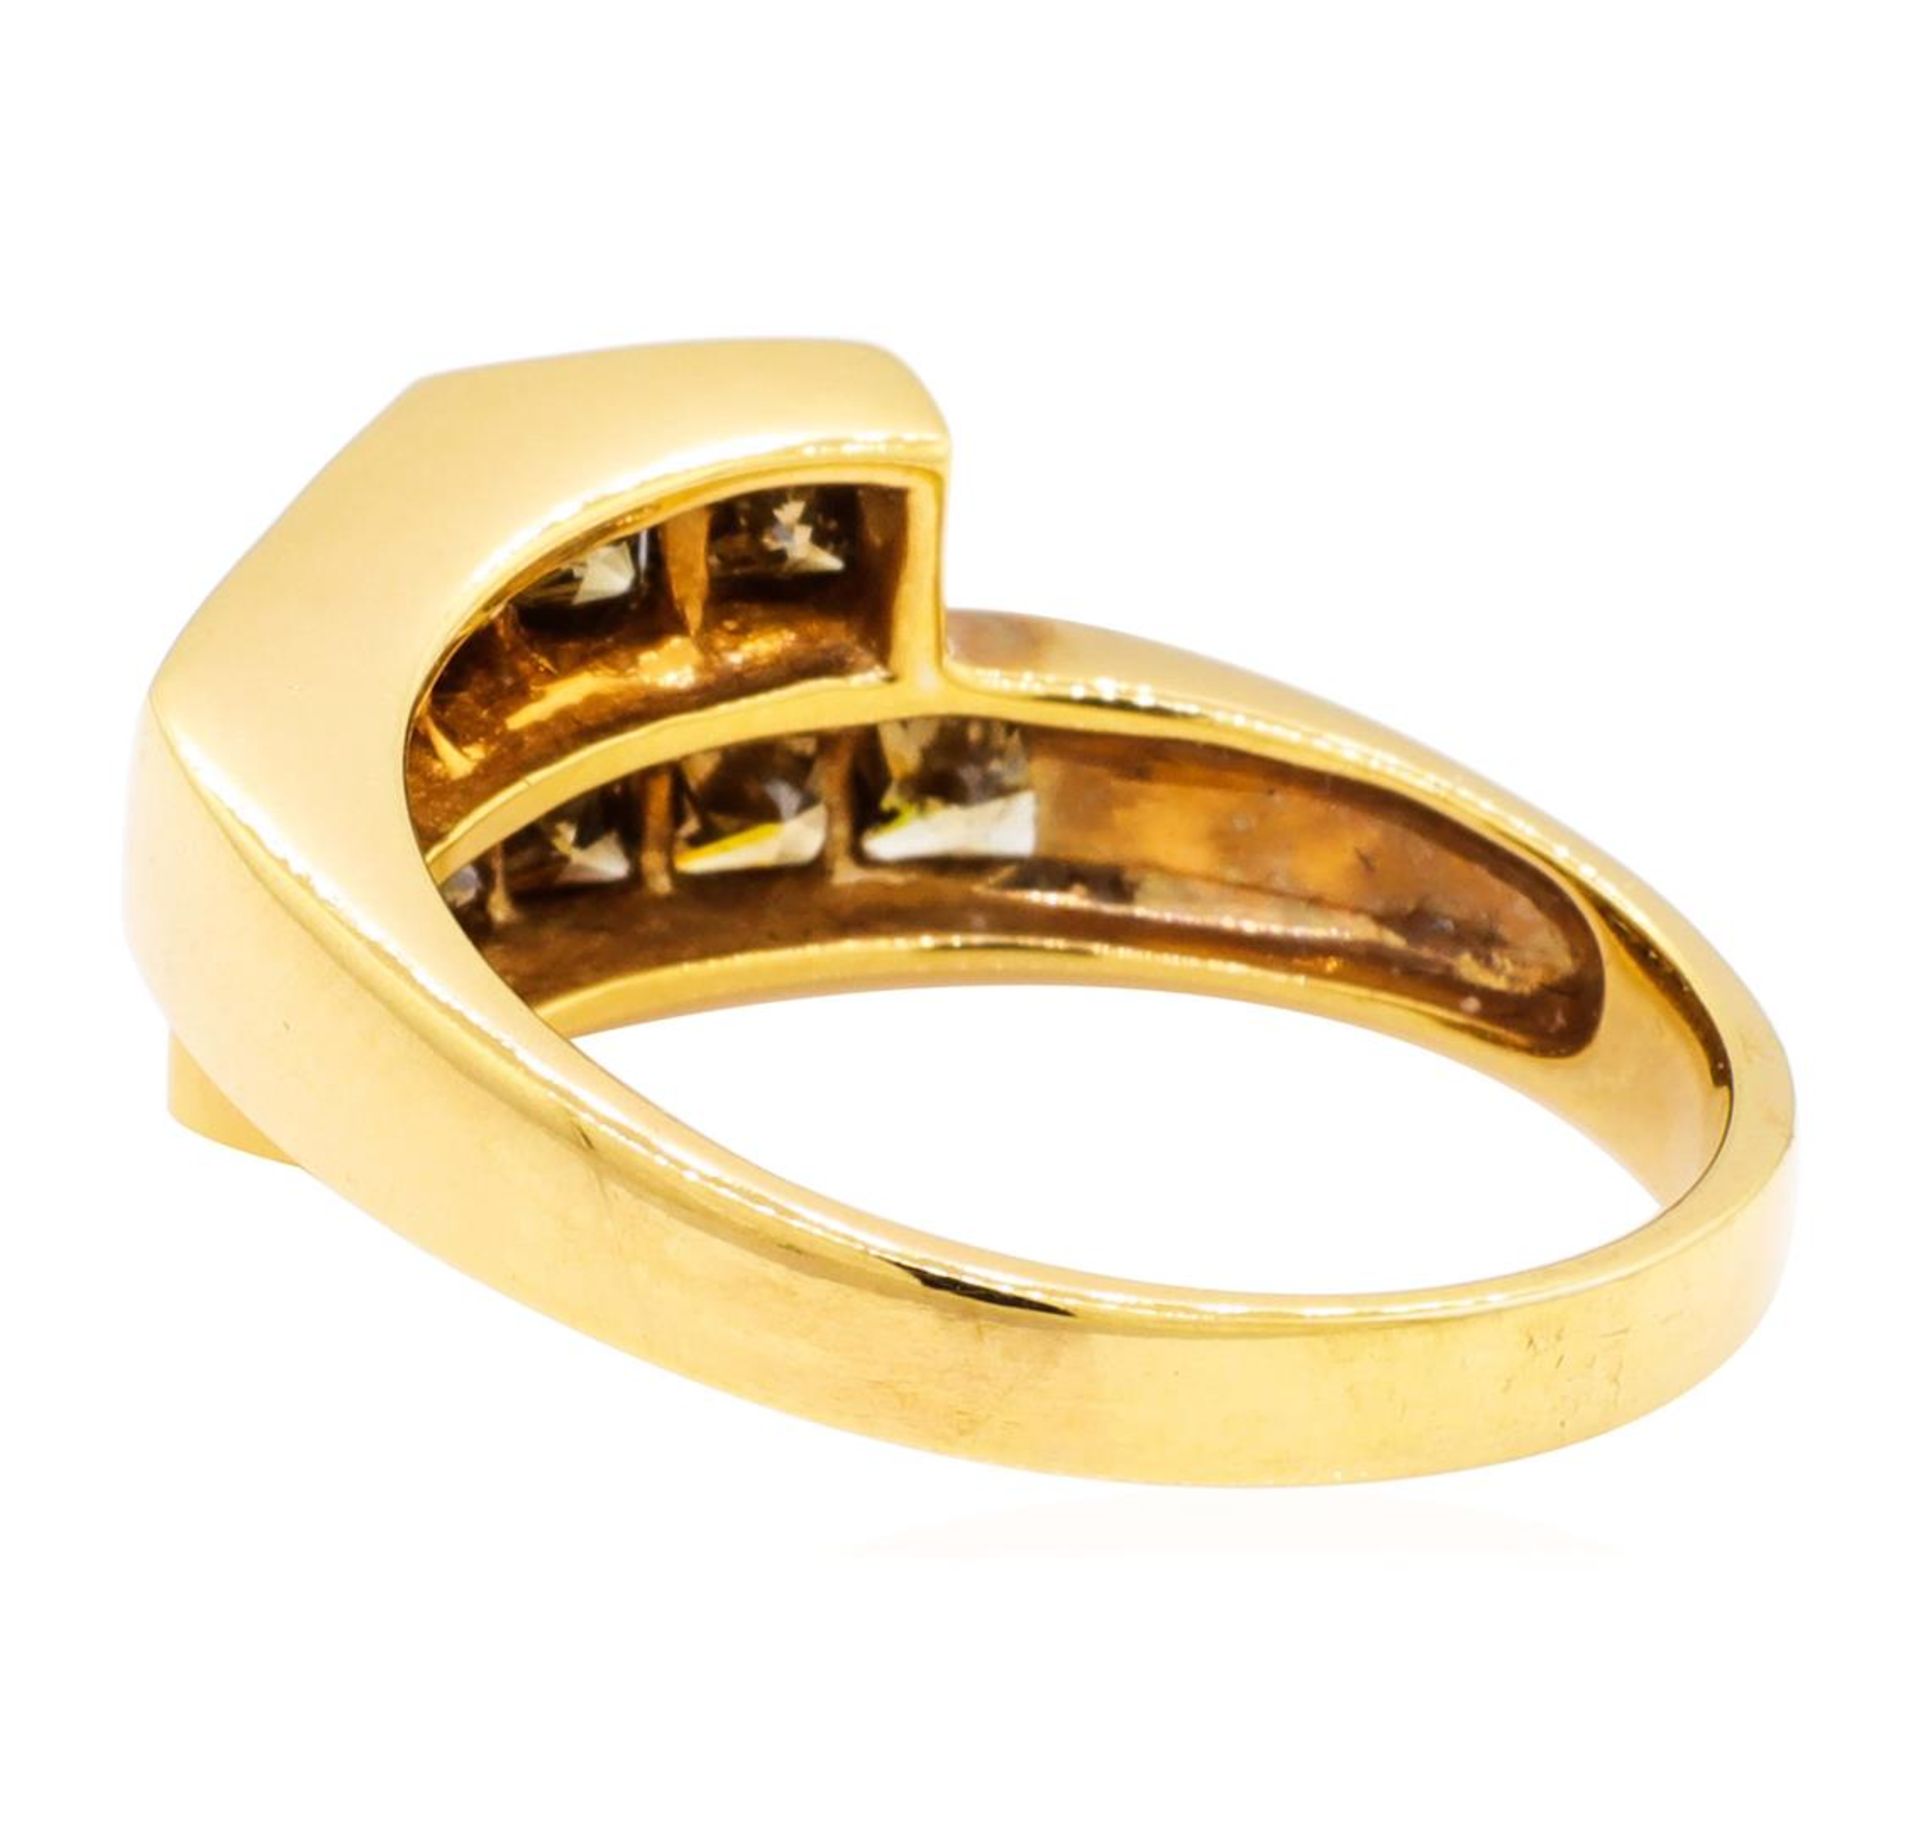 1.65 ctw Princess Cut Diamond Ring - 14KT Rose Gold - Image 3 of 5